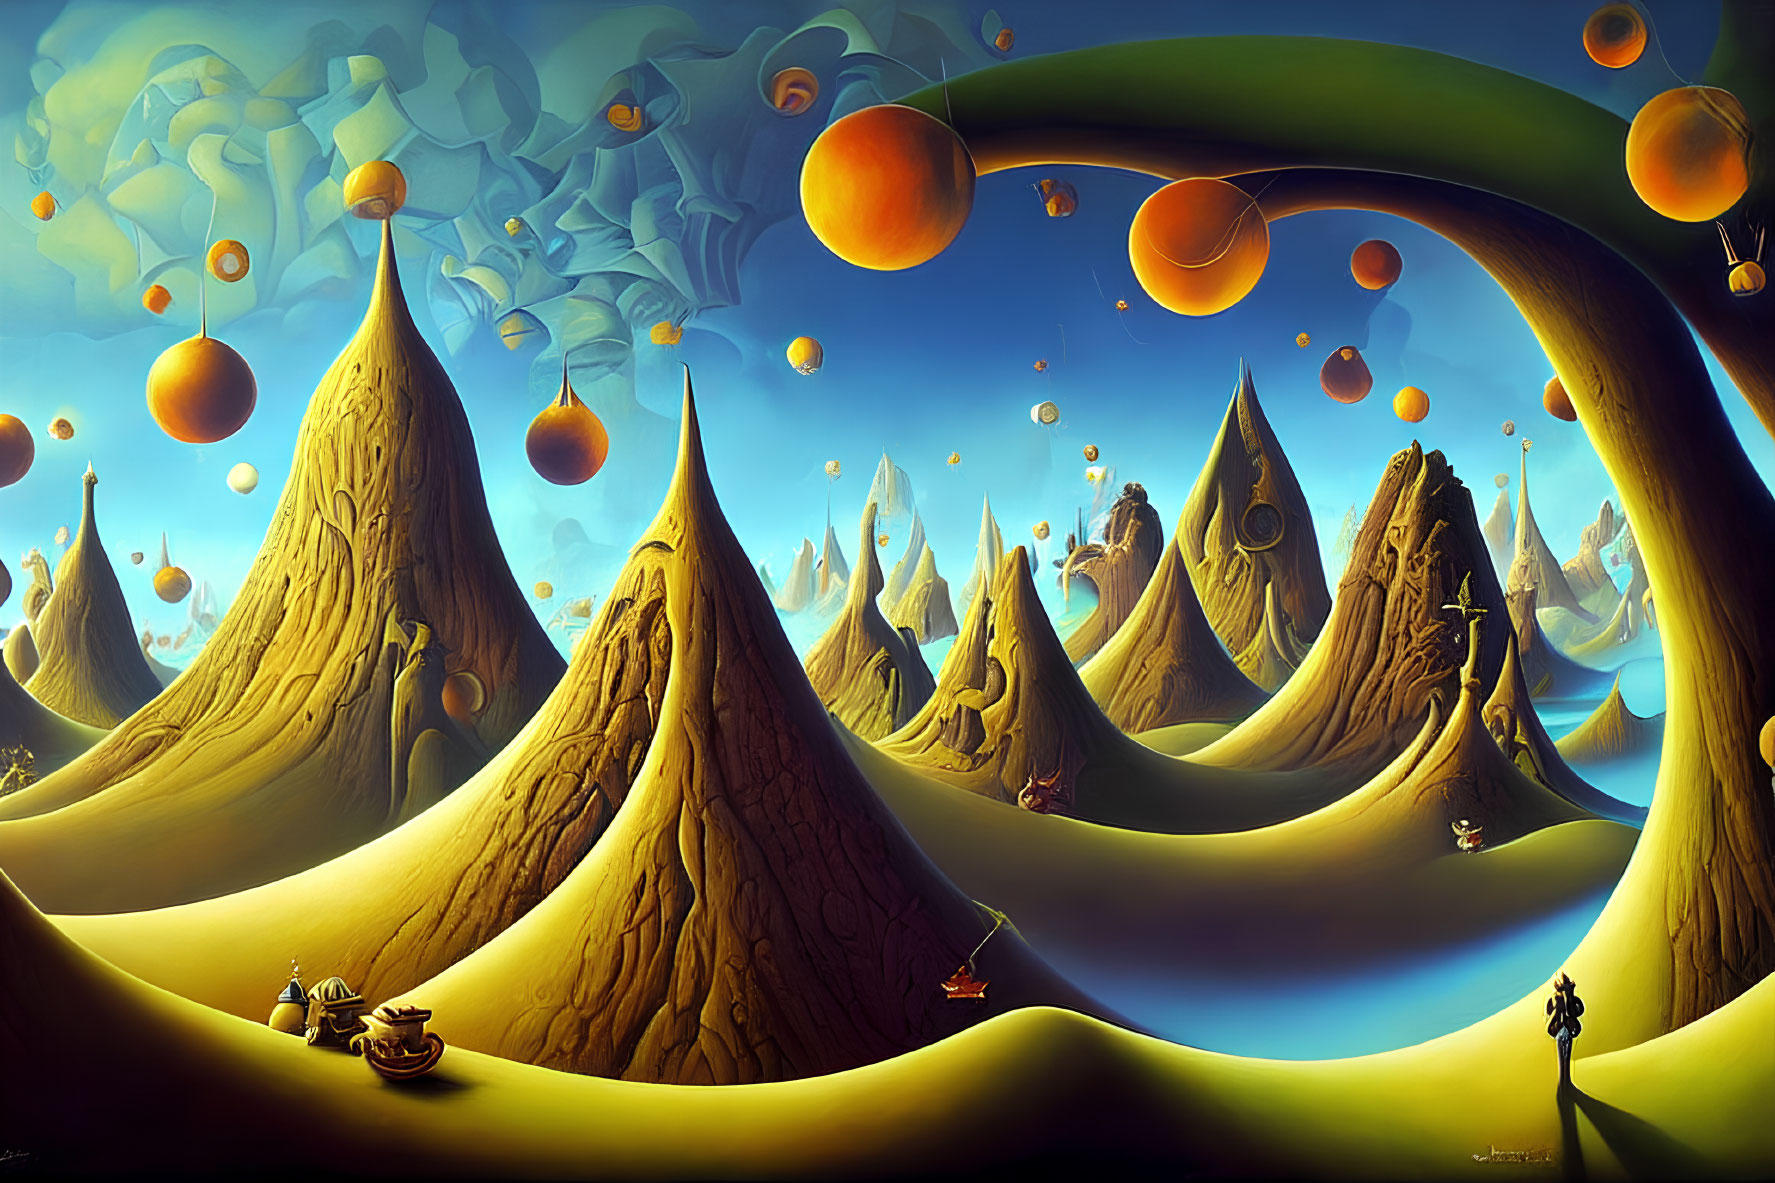 Surreal landscape with conical hills and oversized orange fruits under vibrant blue sky